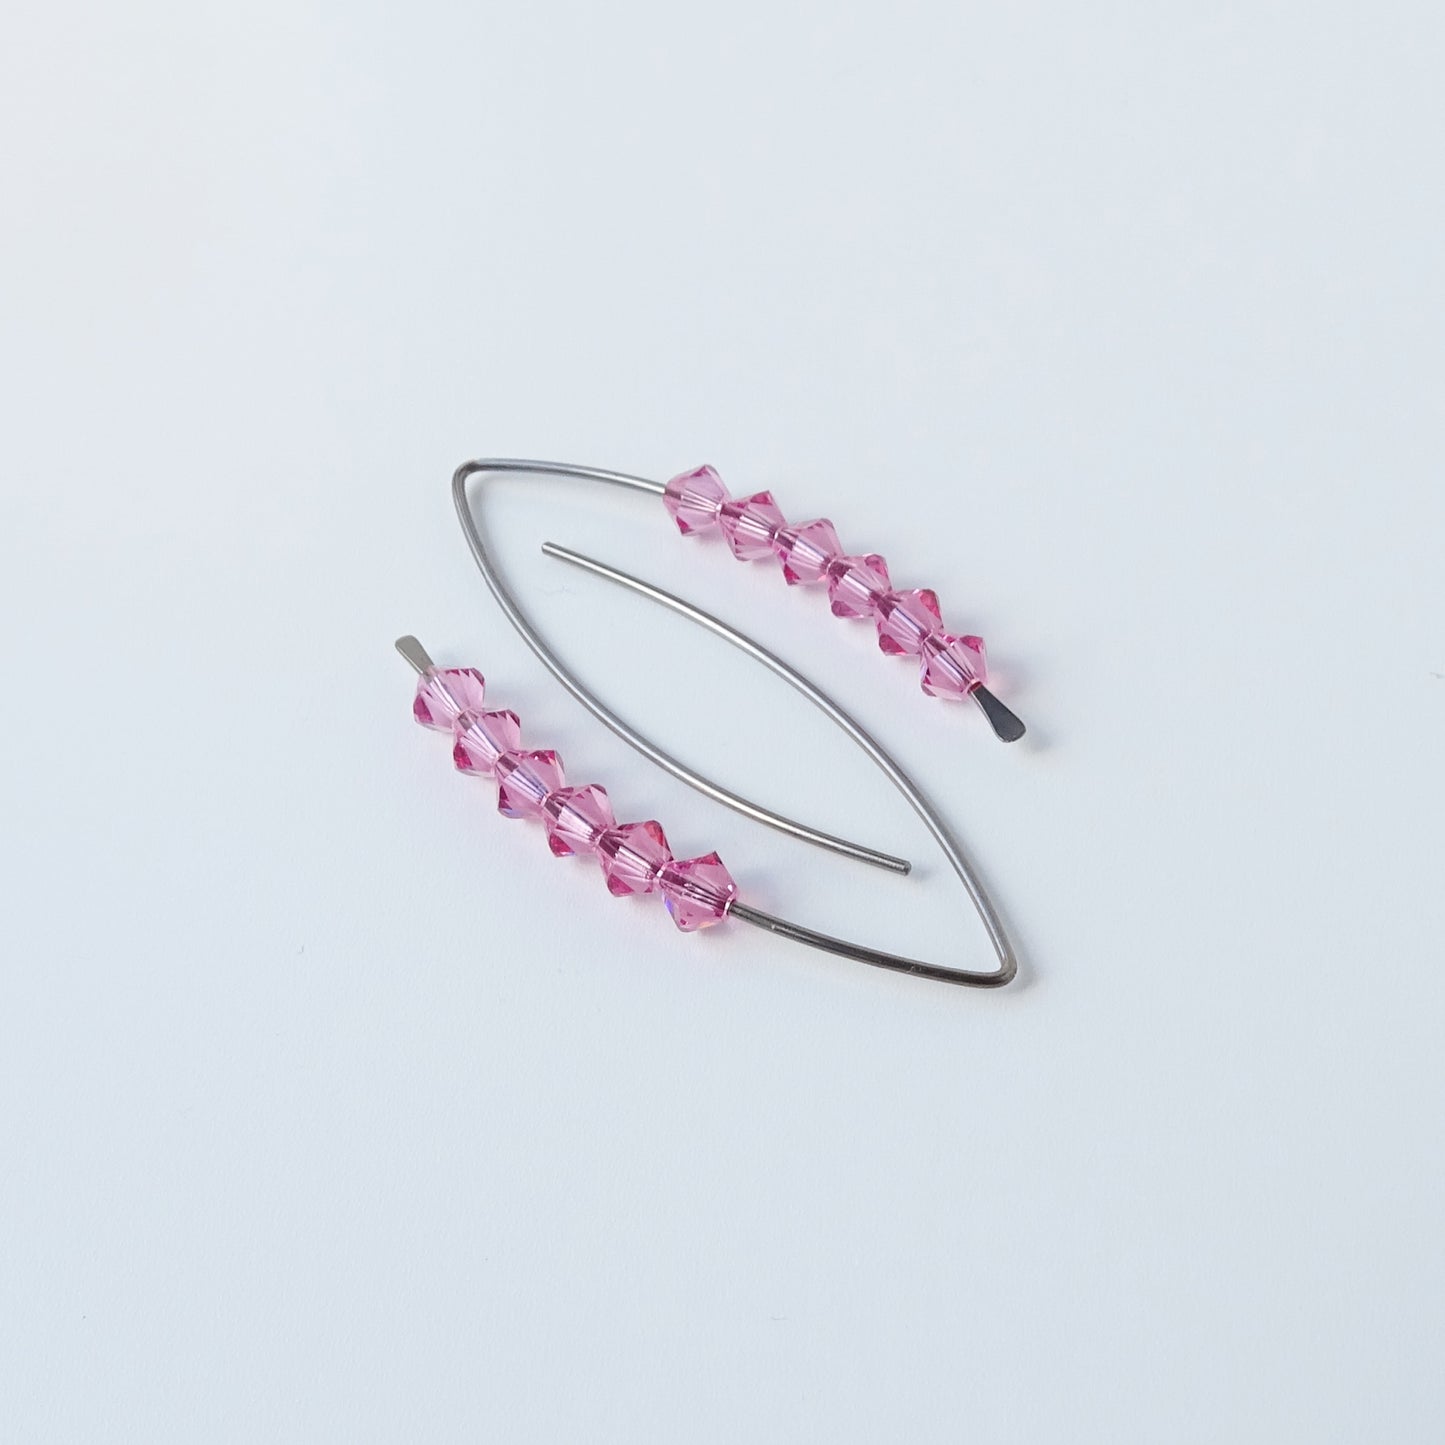 Niobium Earrings with Pink Rose Crystals